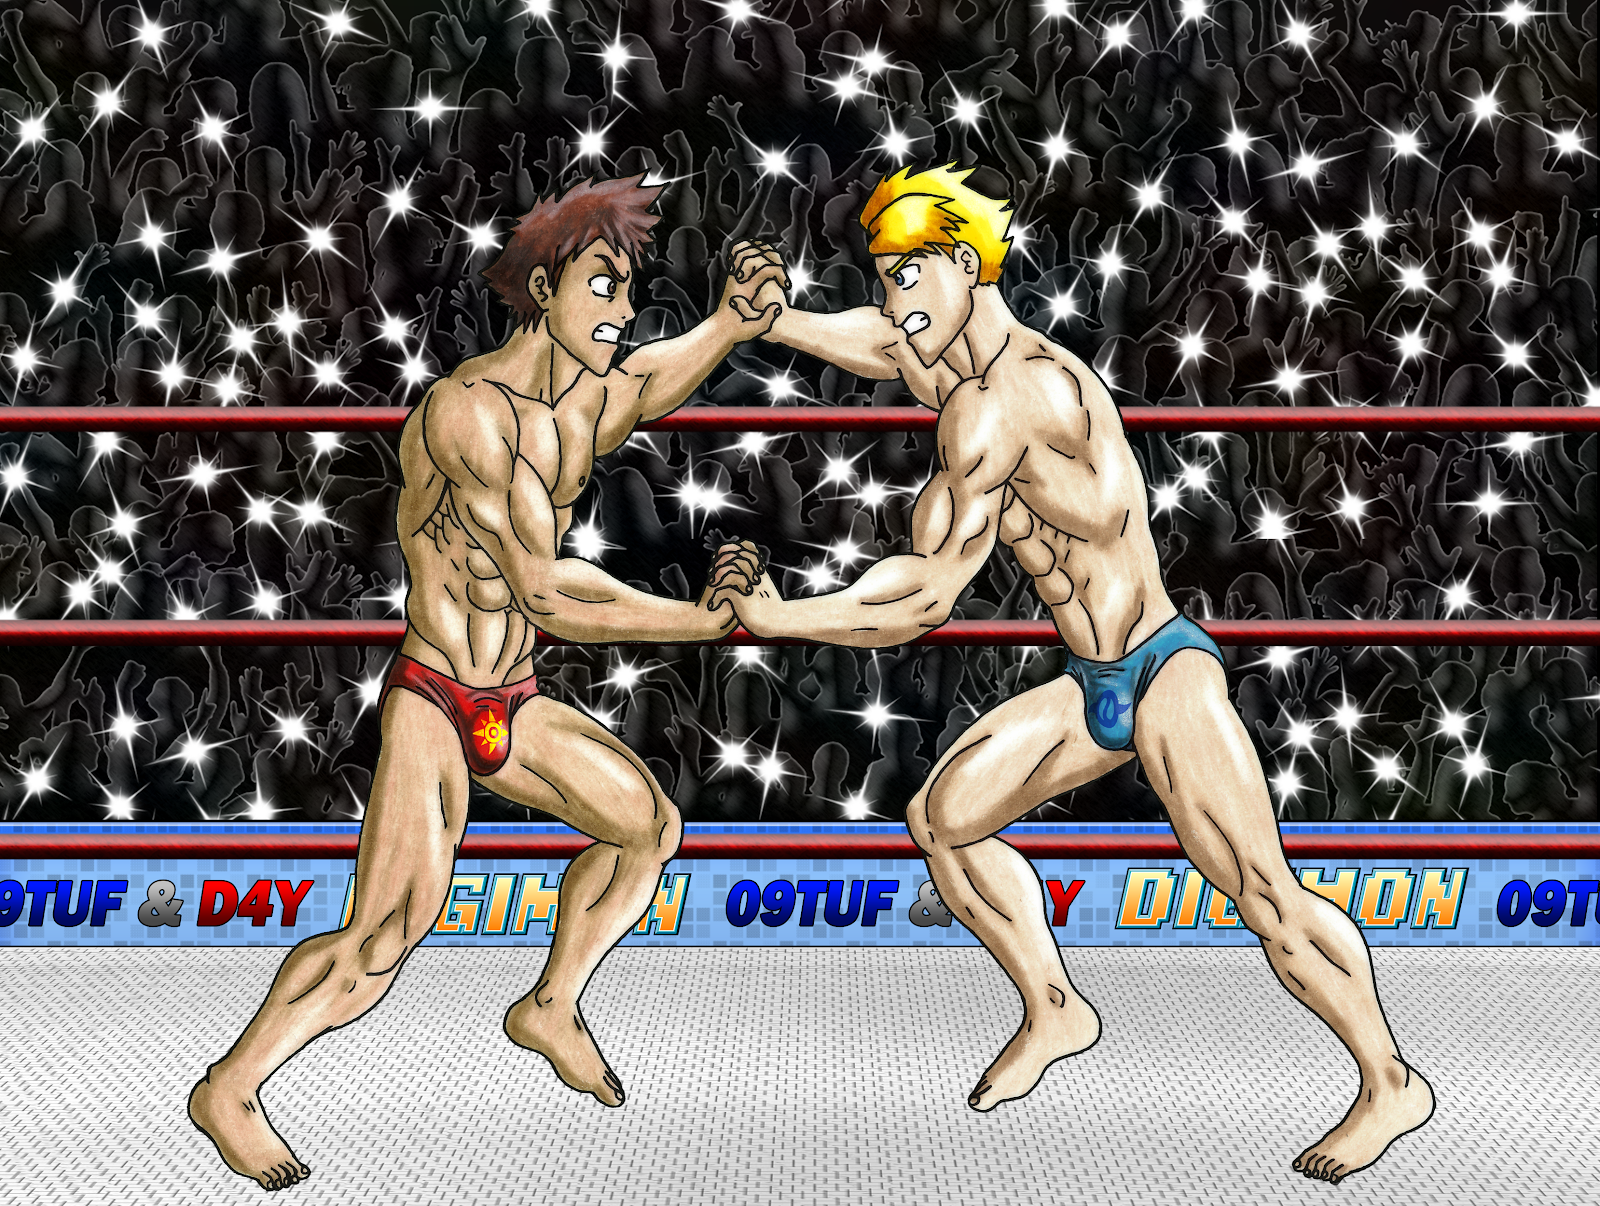 Matt vs Tai - Digimon Wrestling.